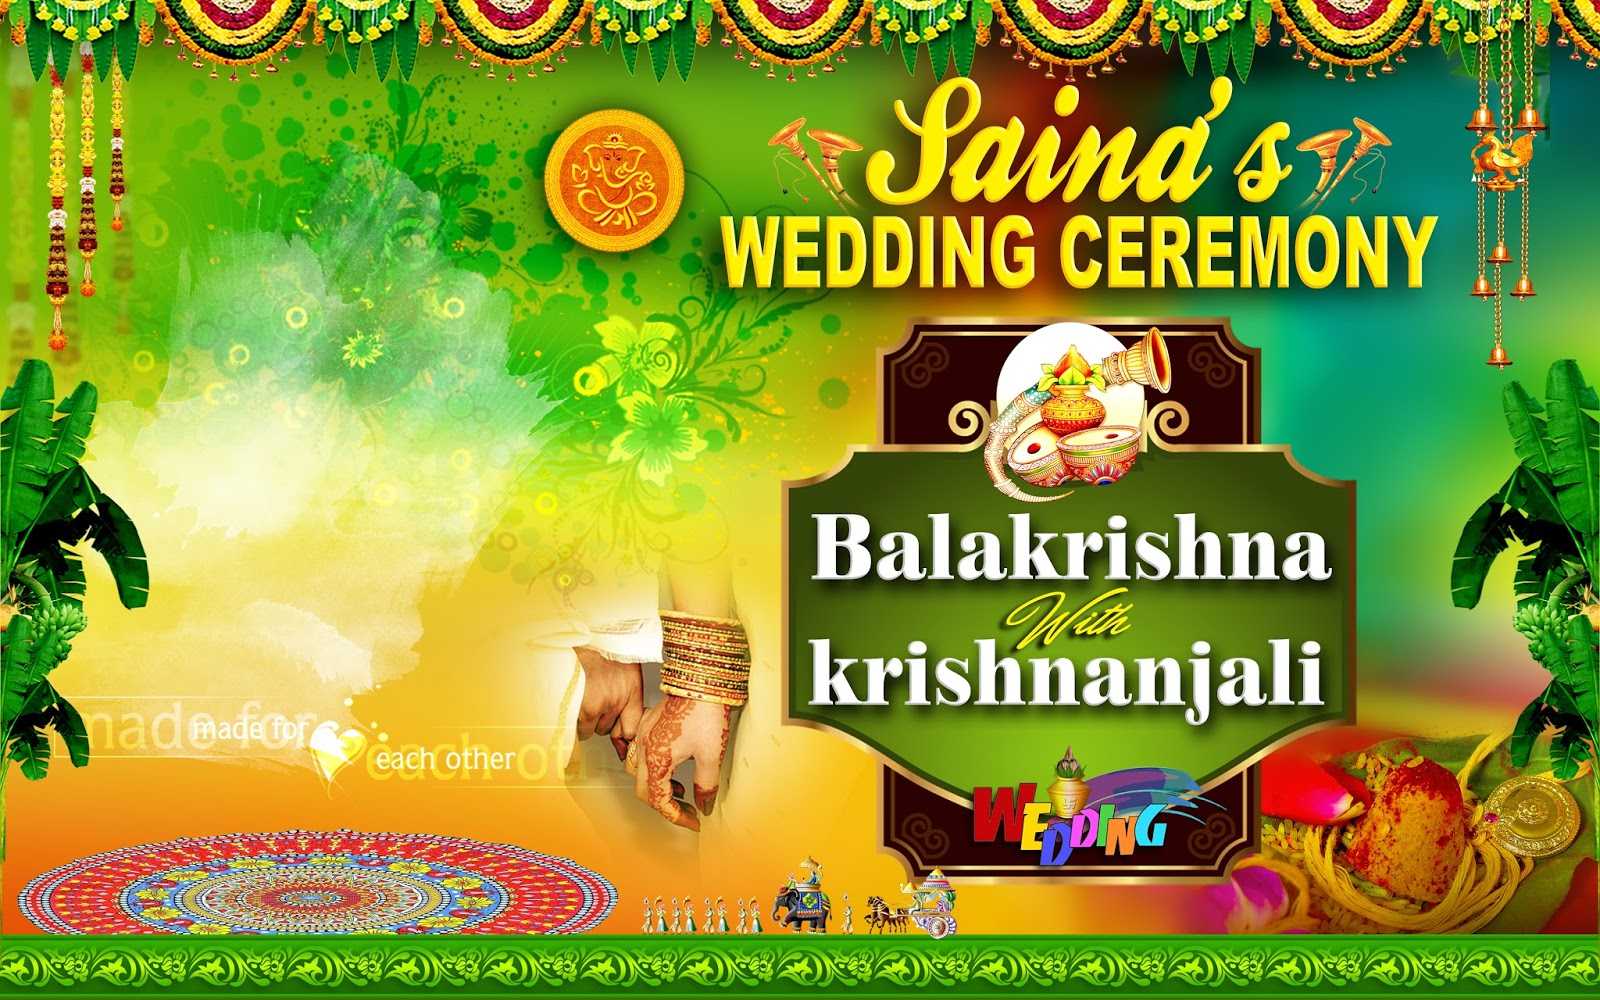 wedding-banner-design-free-download-naveengfx-with-wedding-banner